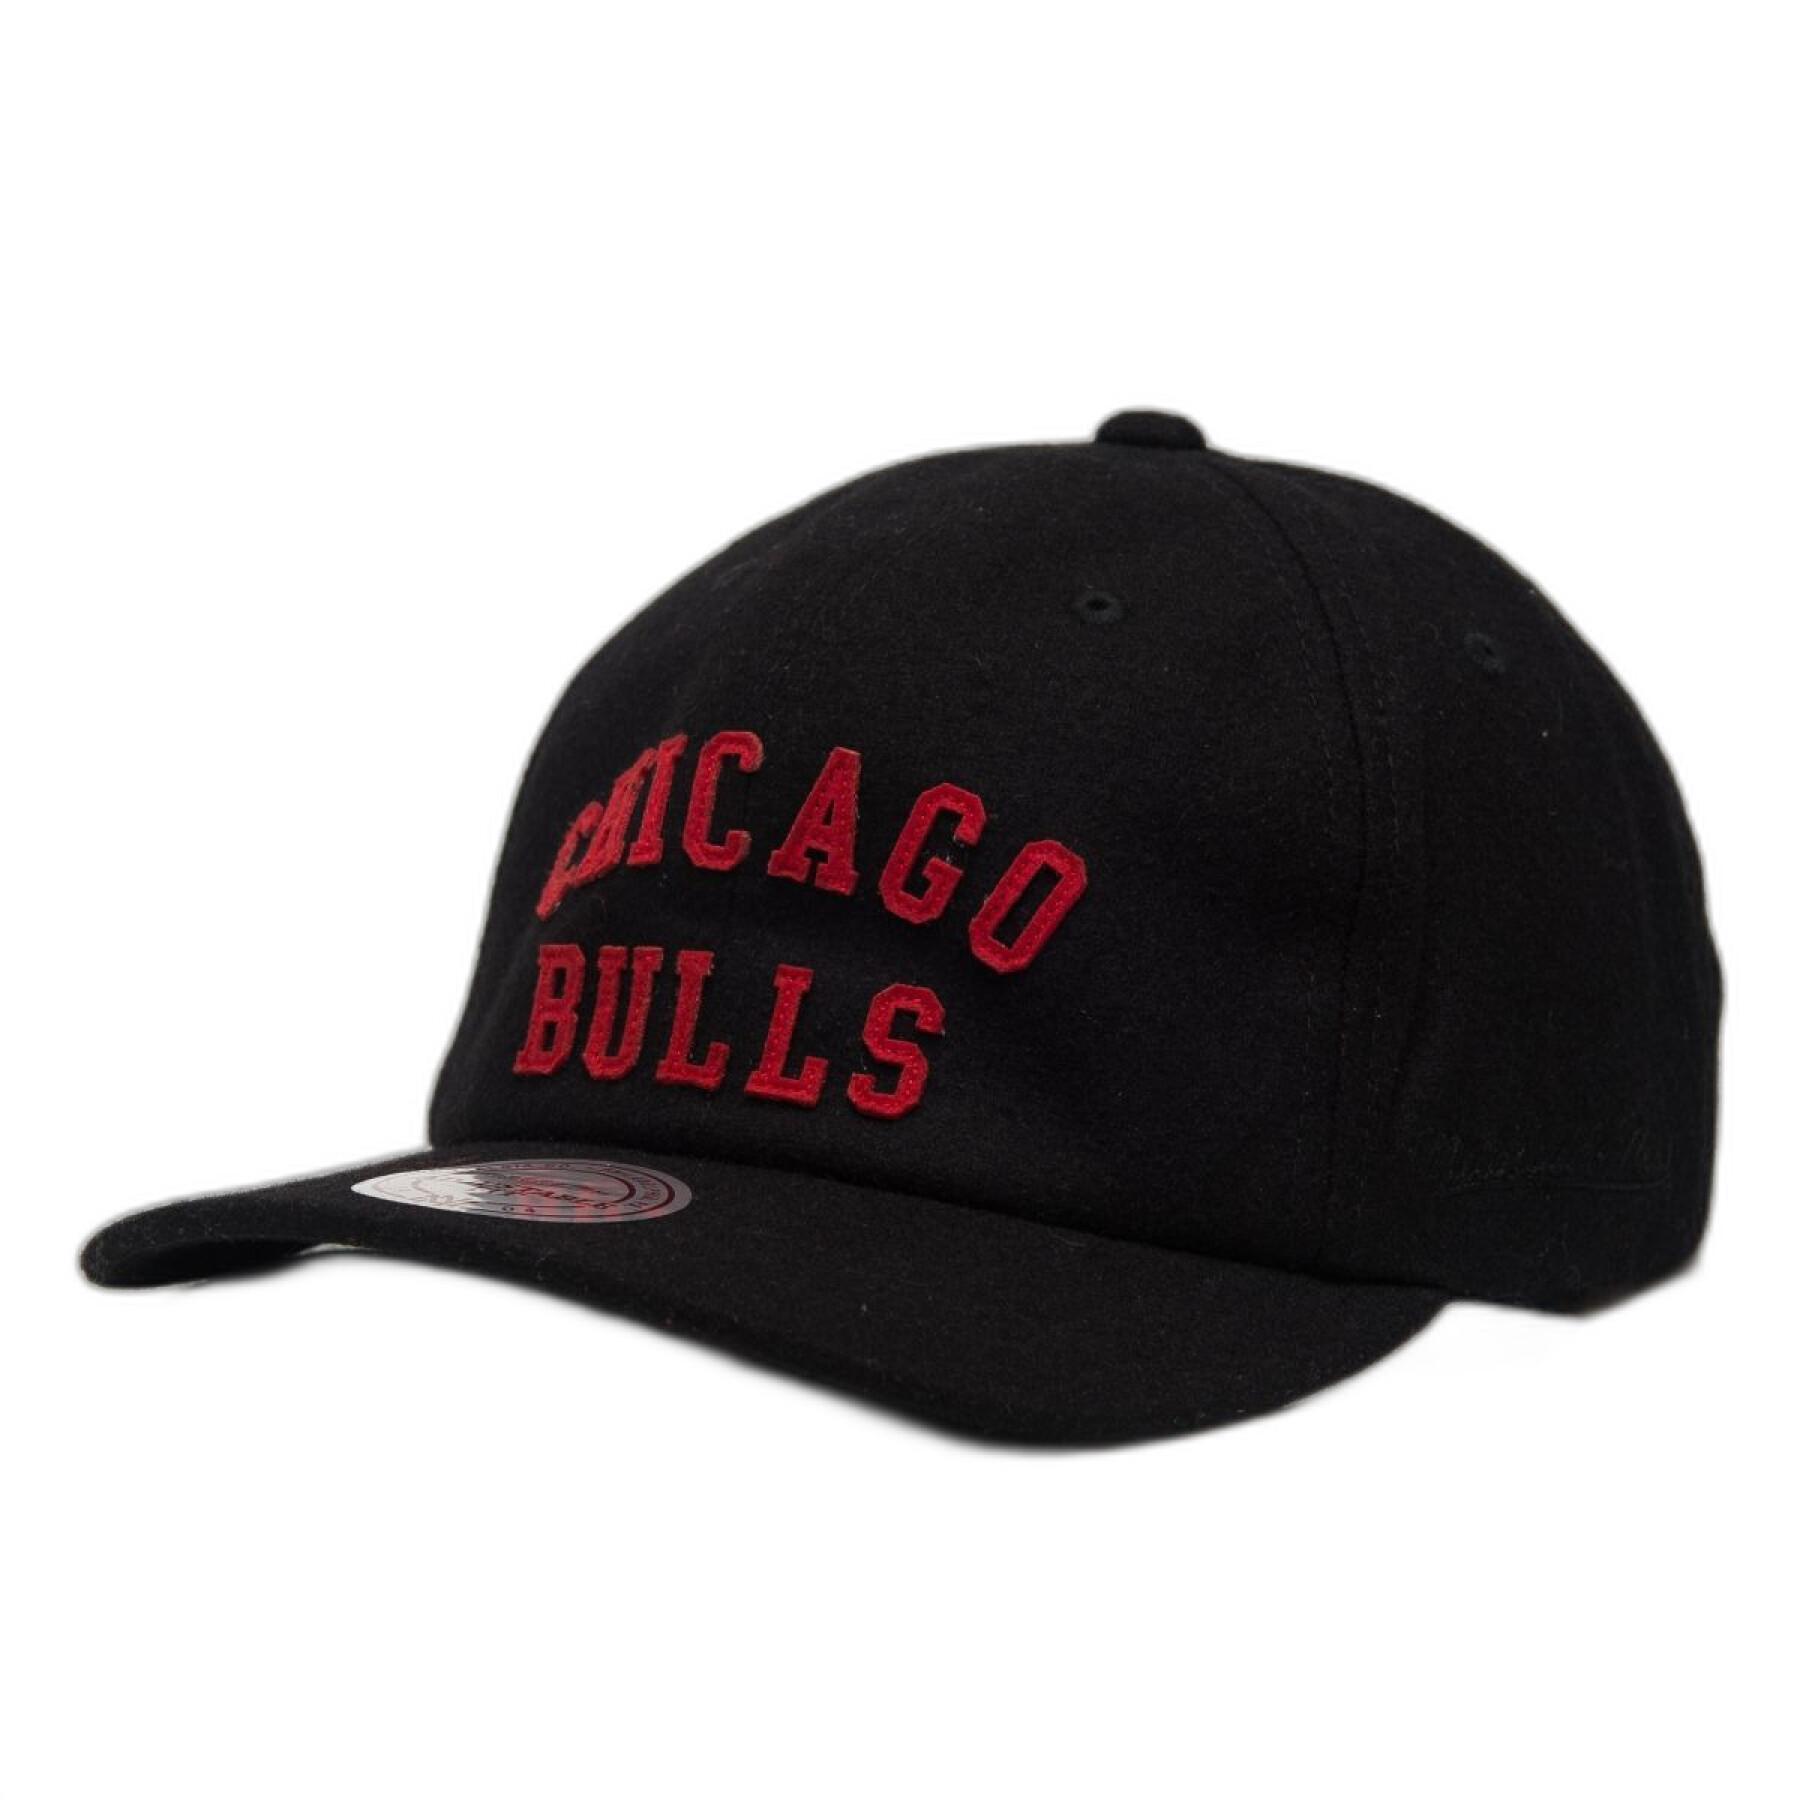 Kappe Chicago Bulls hwc felt arch strapback